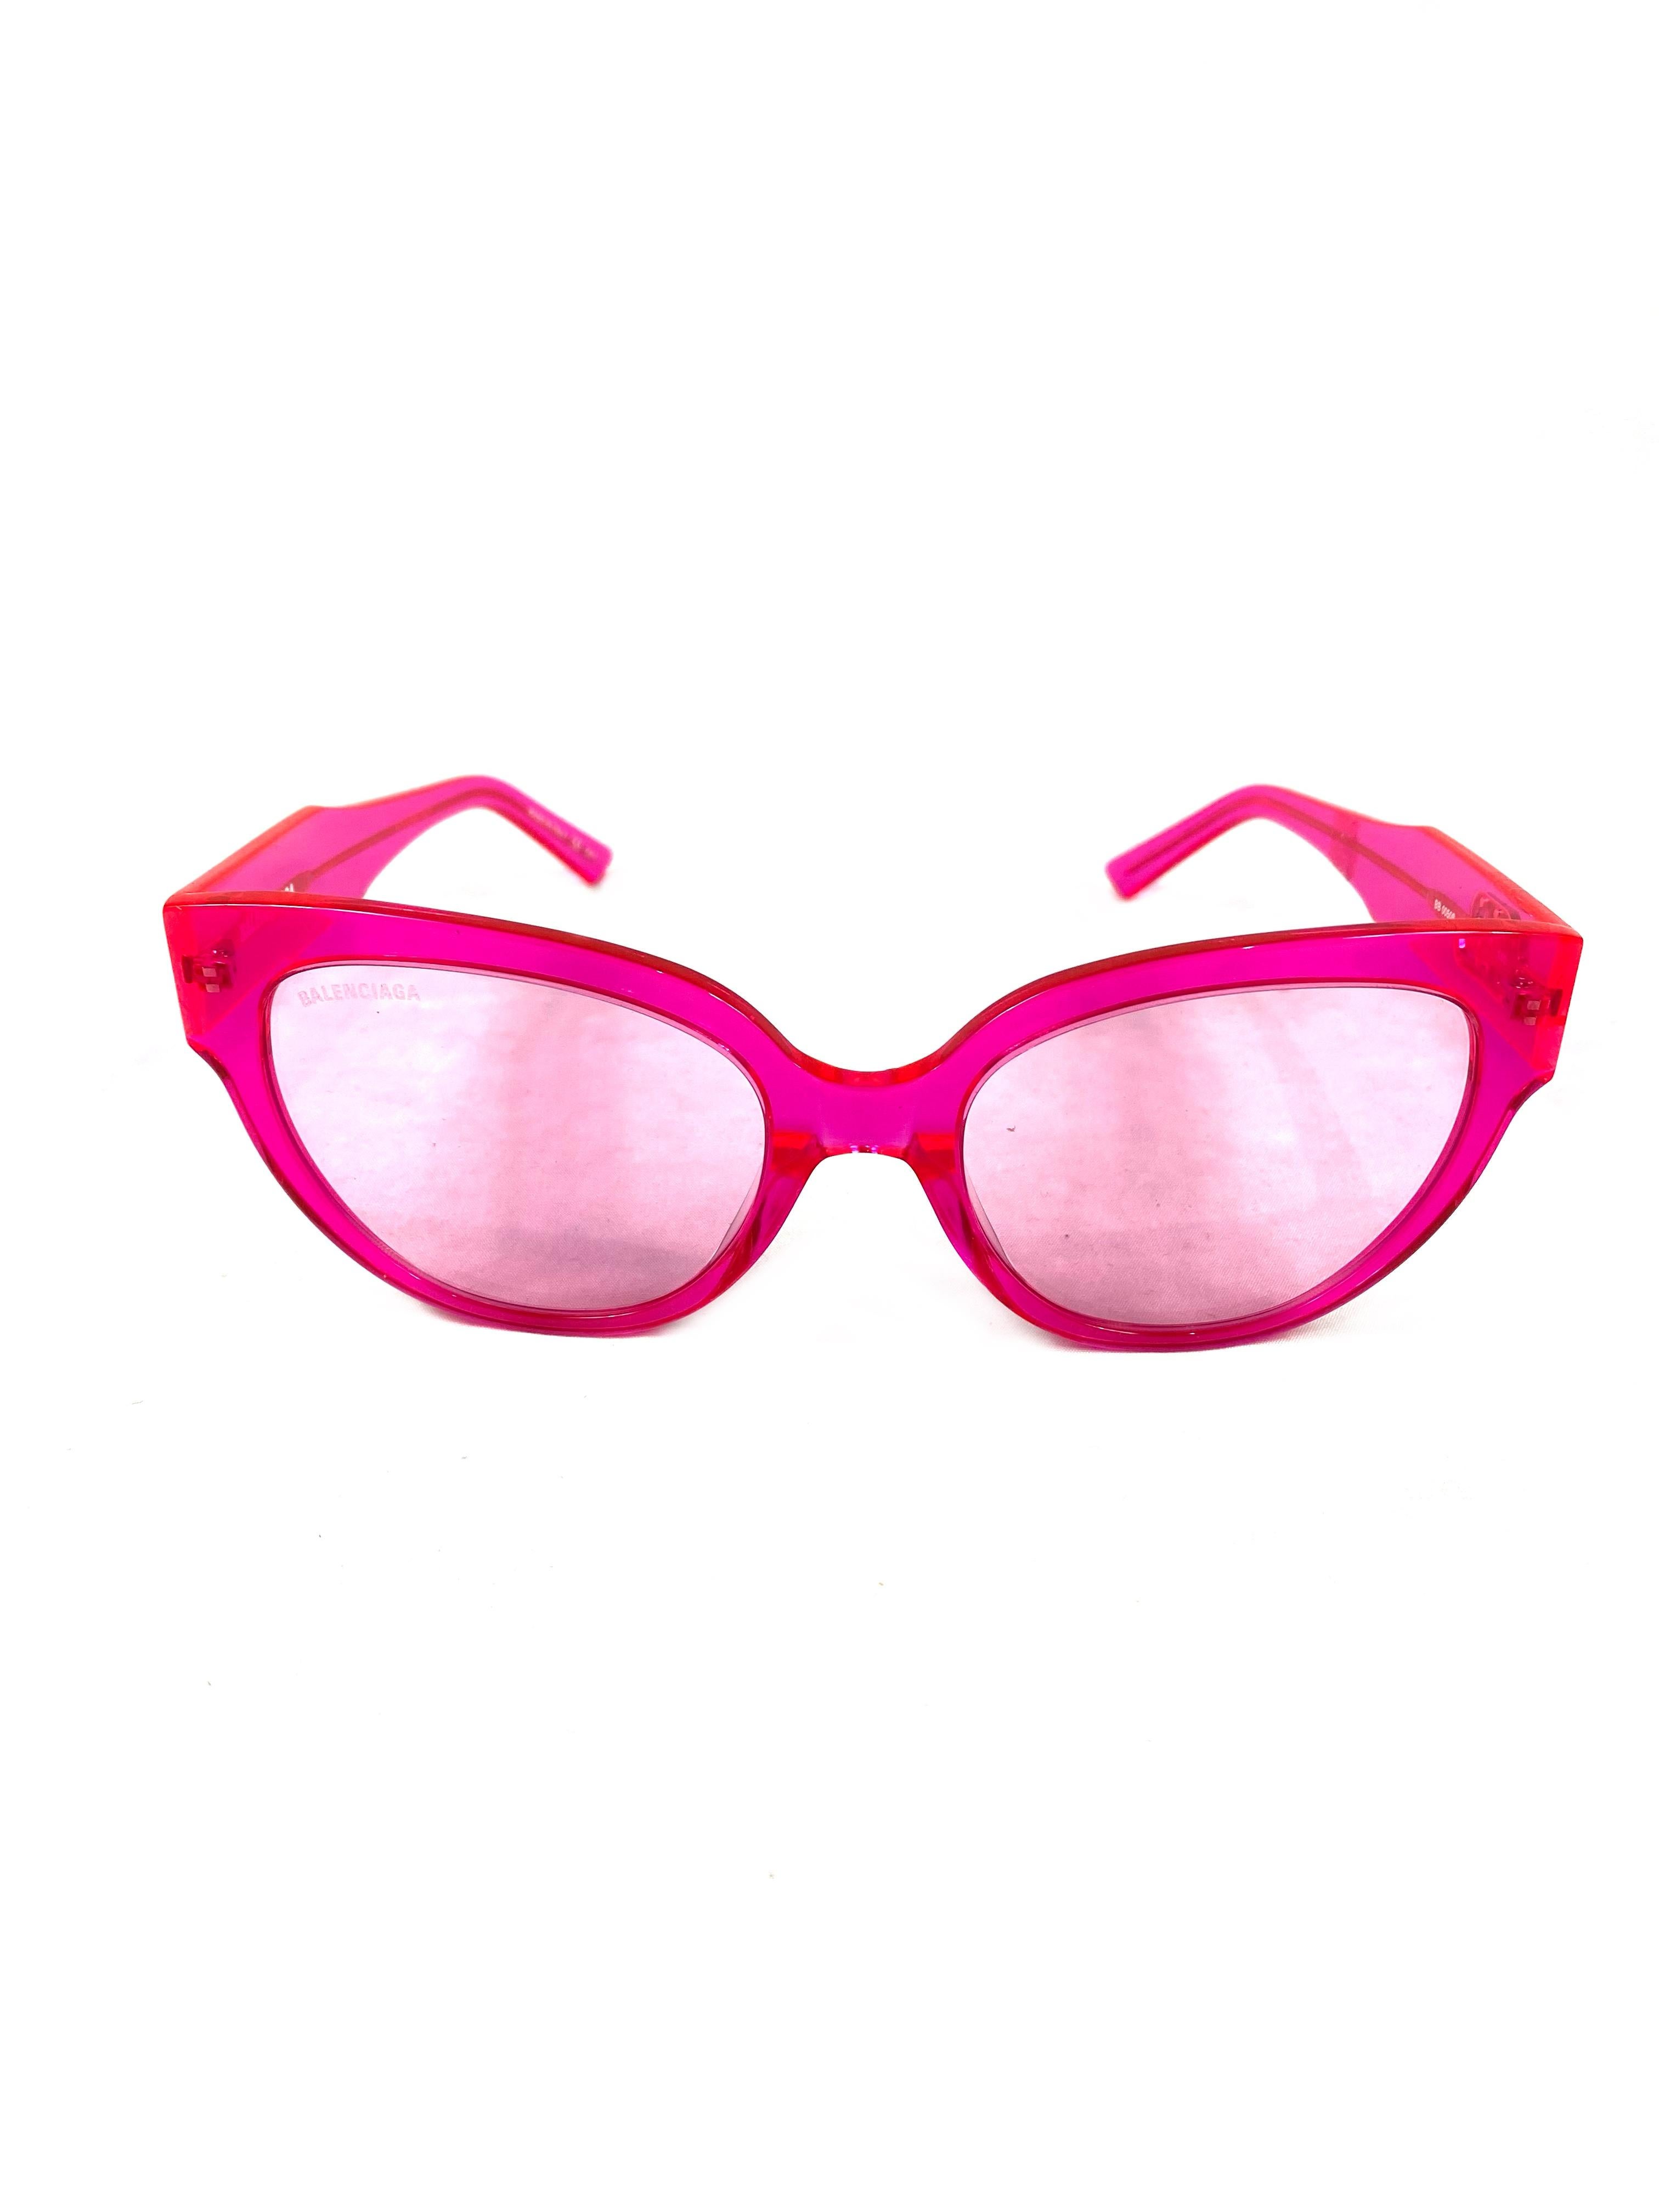 balenciaga pink sunglasses